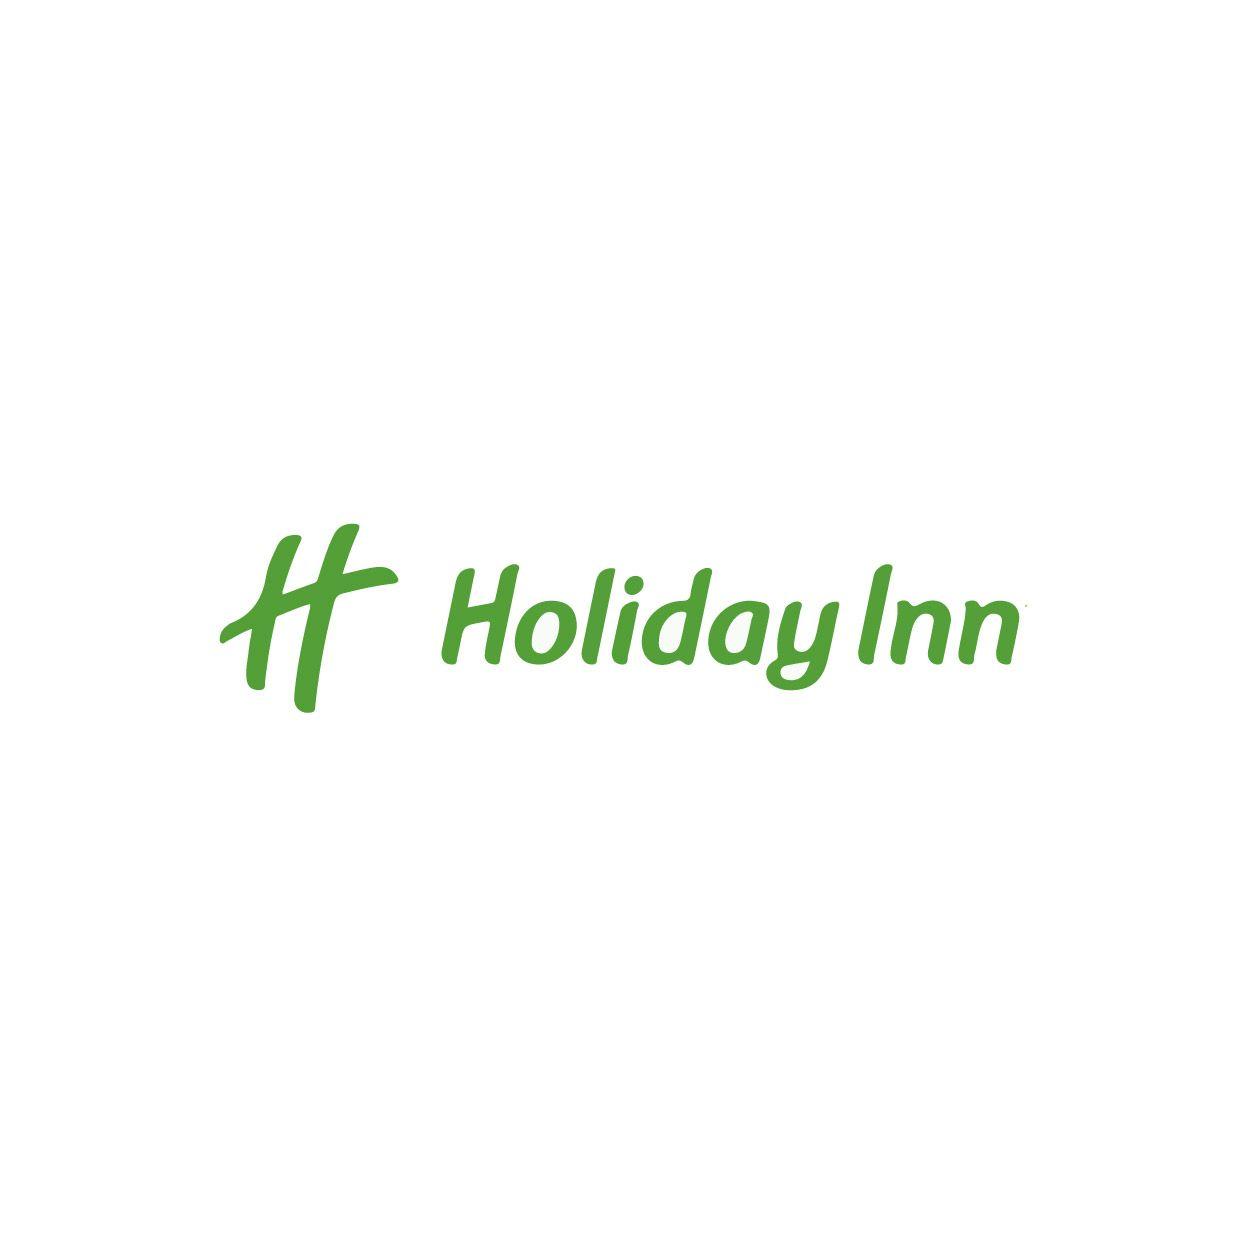 Holiday Inn Logo - Holiday Inn Logo - Parking Management Company